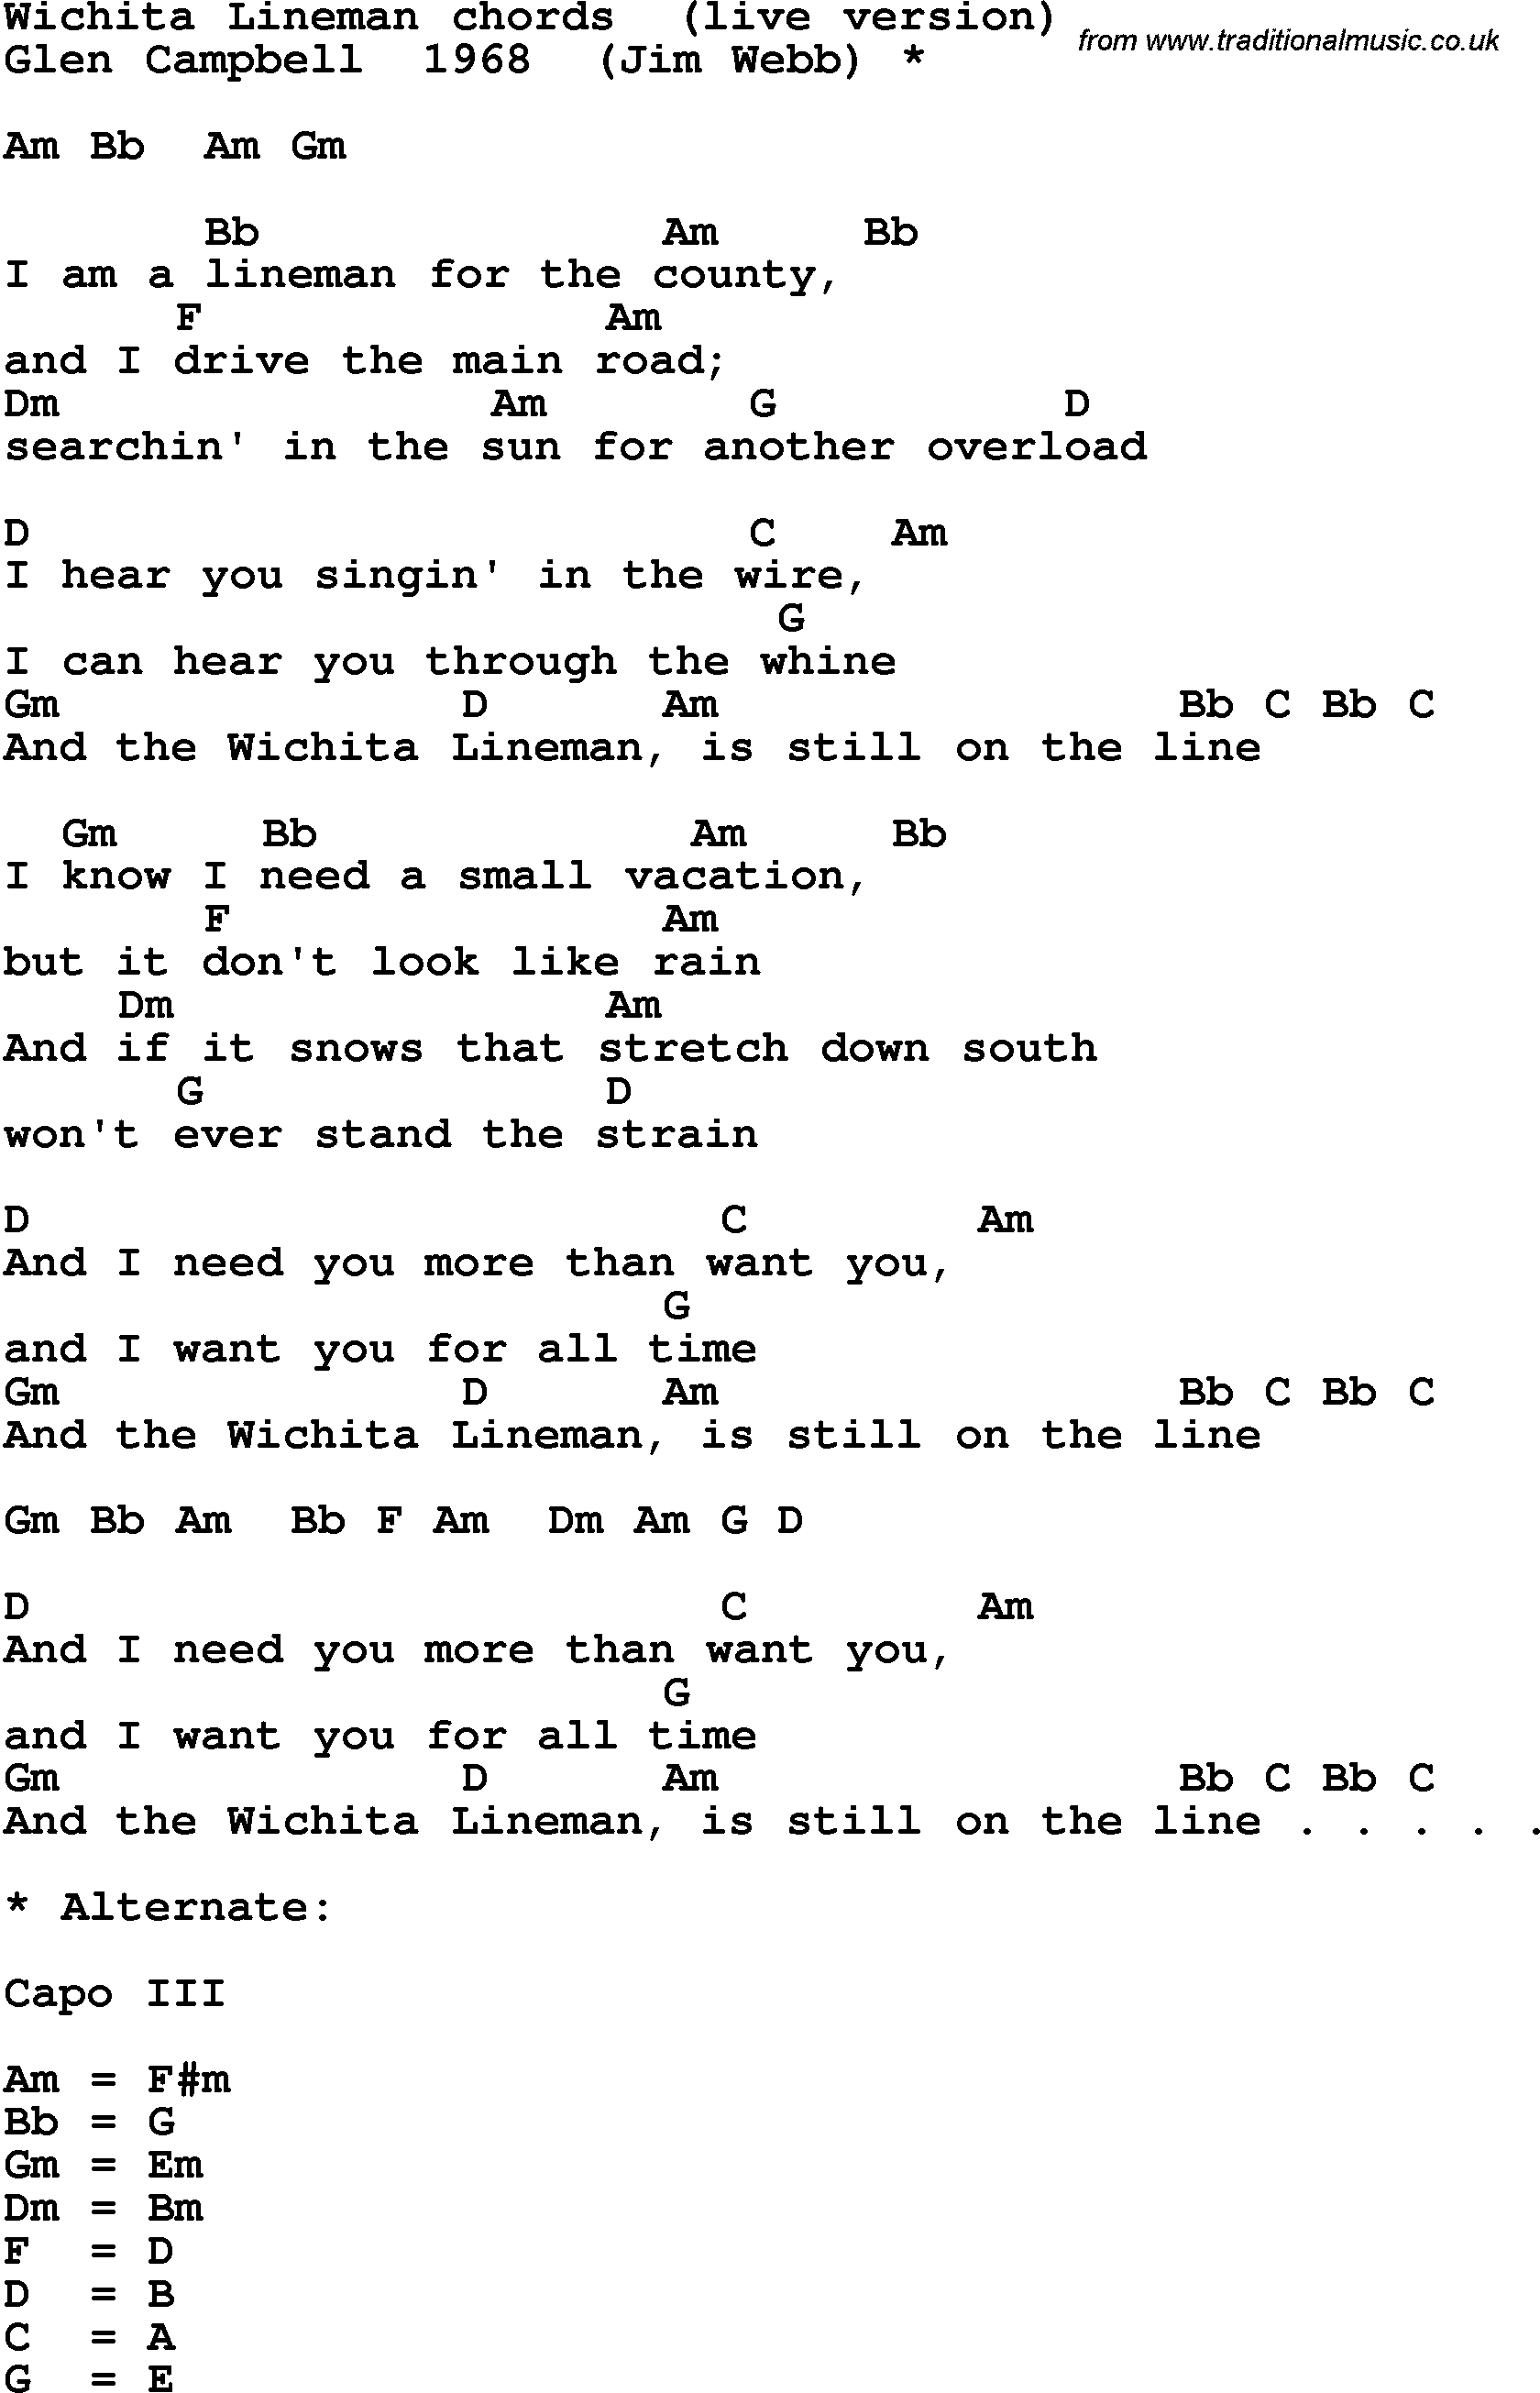 Song Lyrics with guitar chords for Wichita Lineman